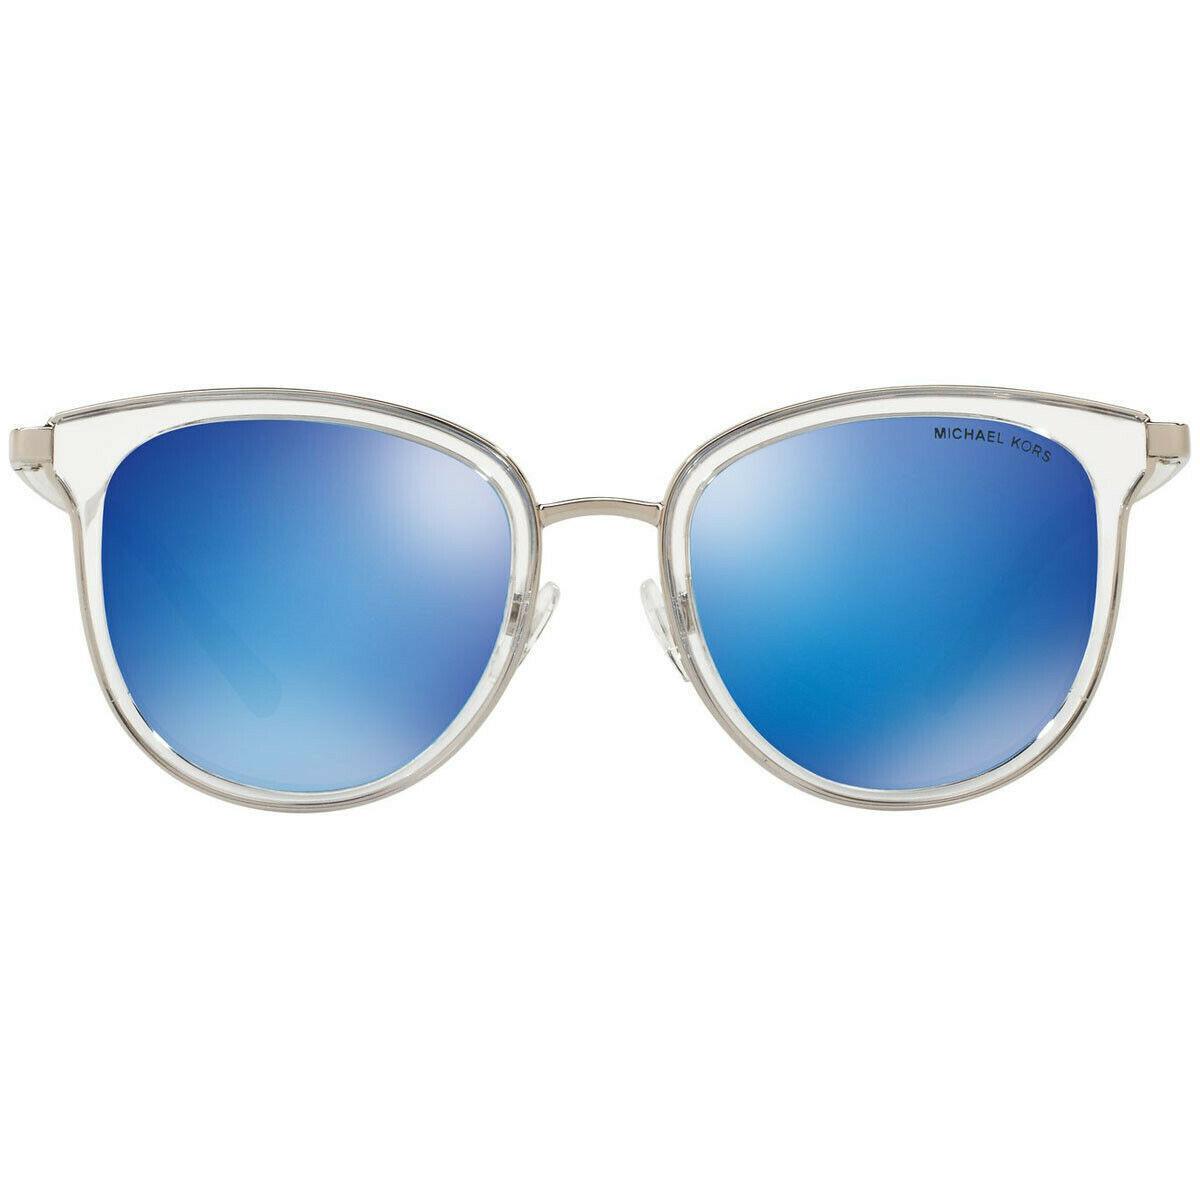 Michael Kors Sunglasses MK1010 110525 Adianna I Clear Silve r/ Blue 54-20-135